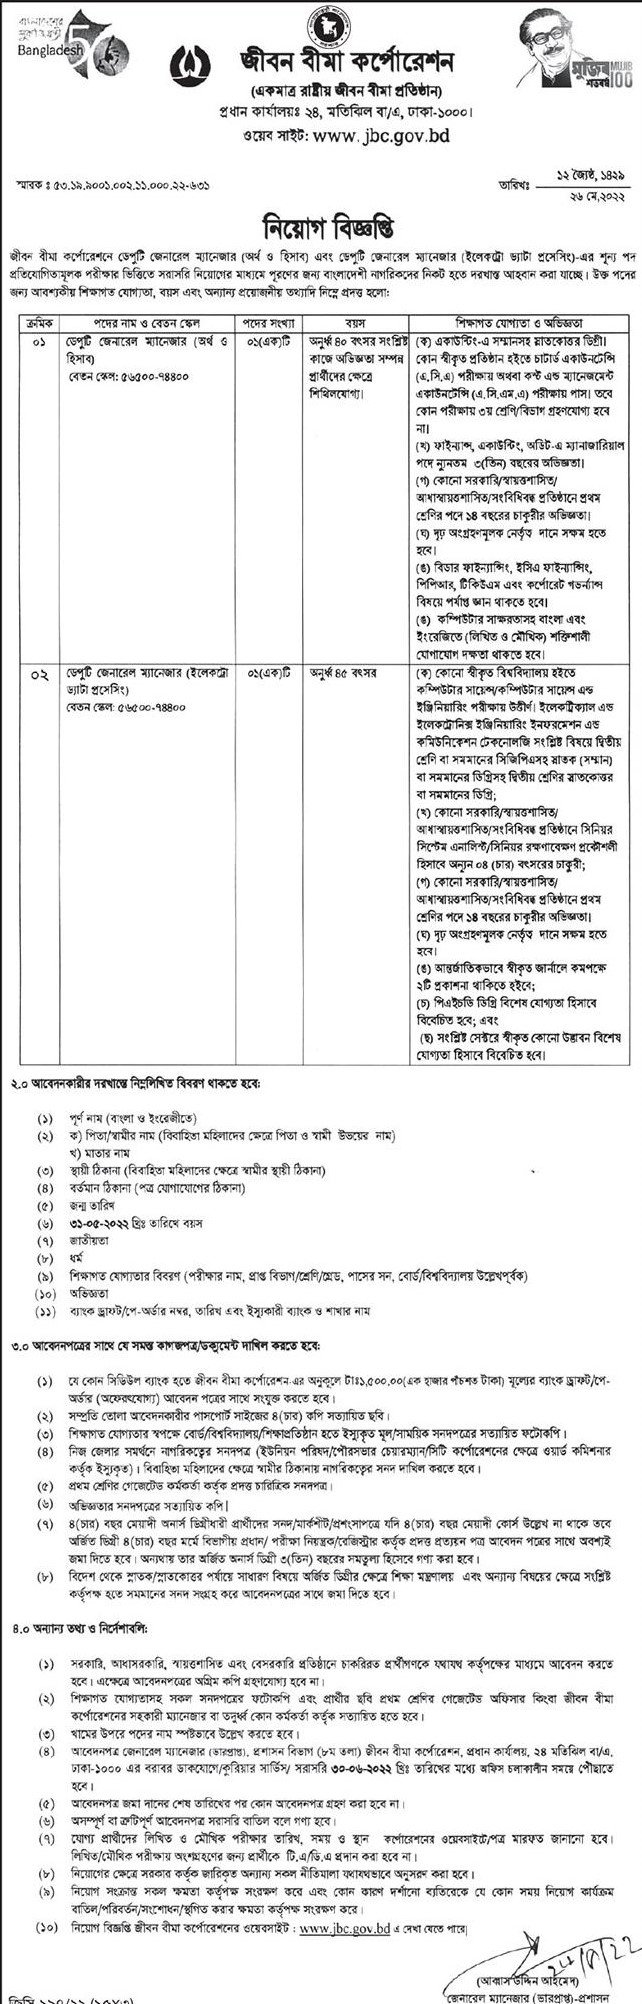 Jibon Bima Job Circular 2022 PDF & Image Download